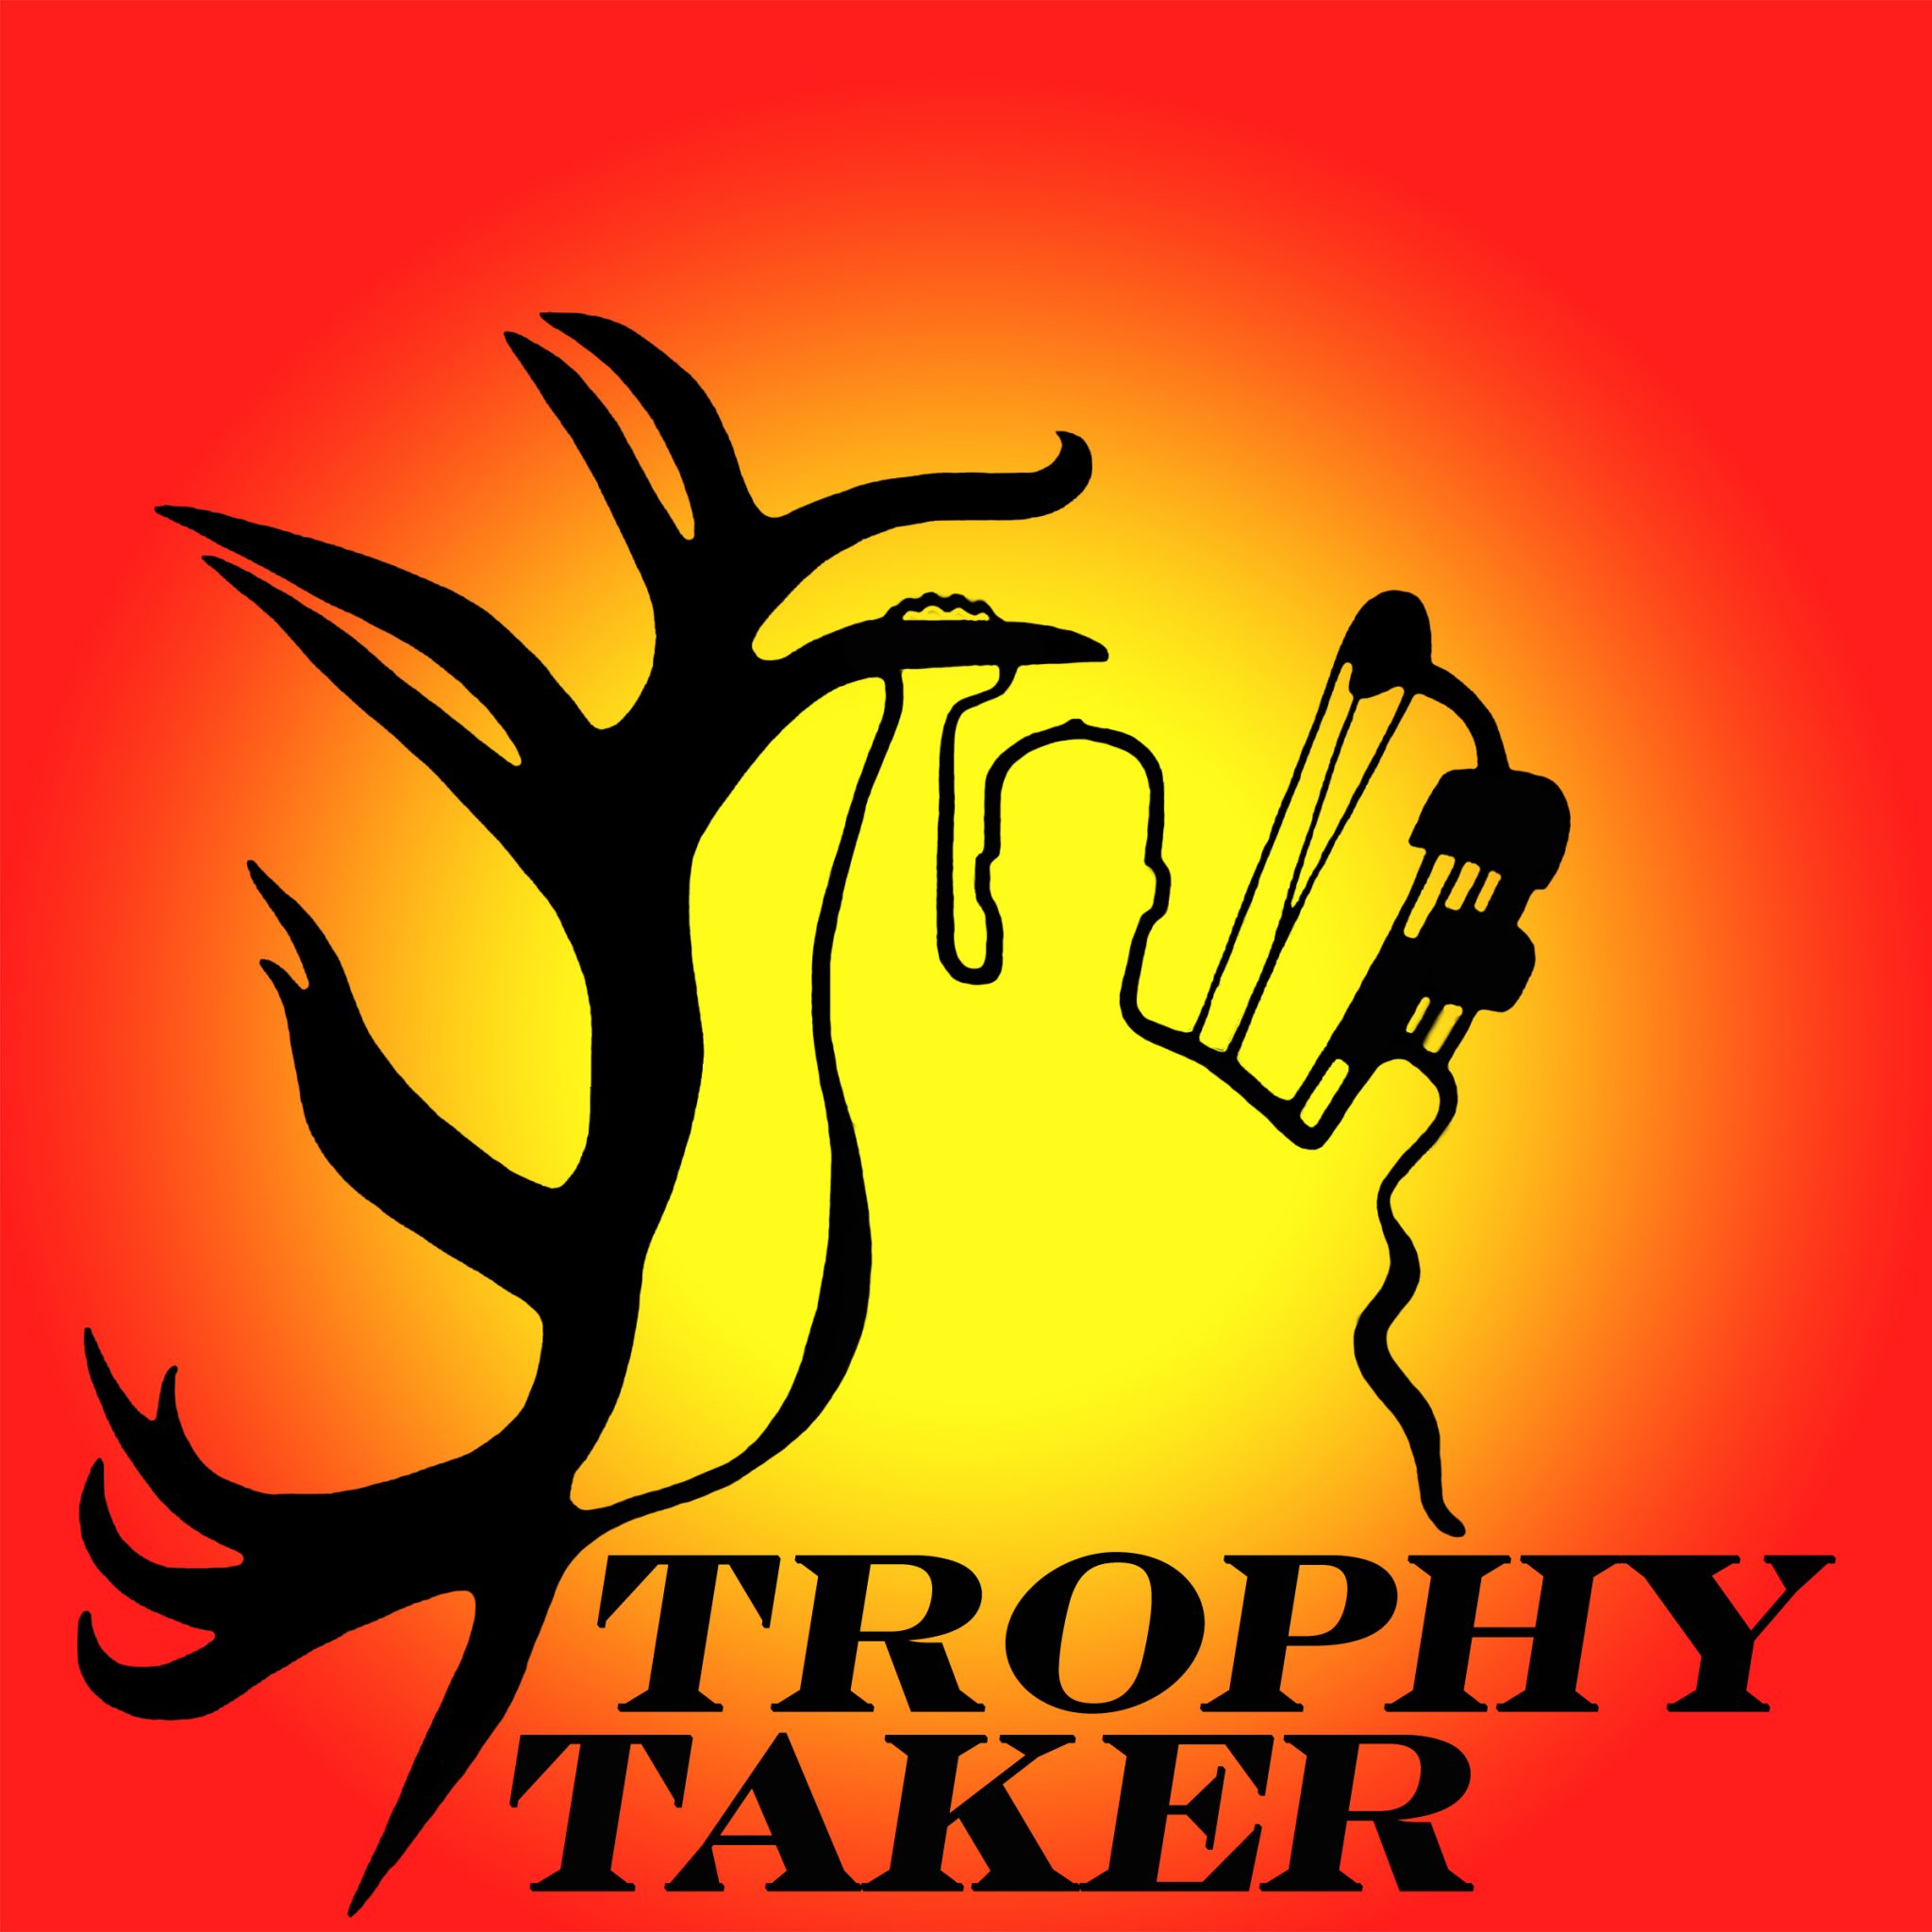 new trophy taker logo- color- jpeg- high resolution size